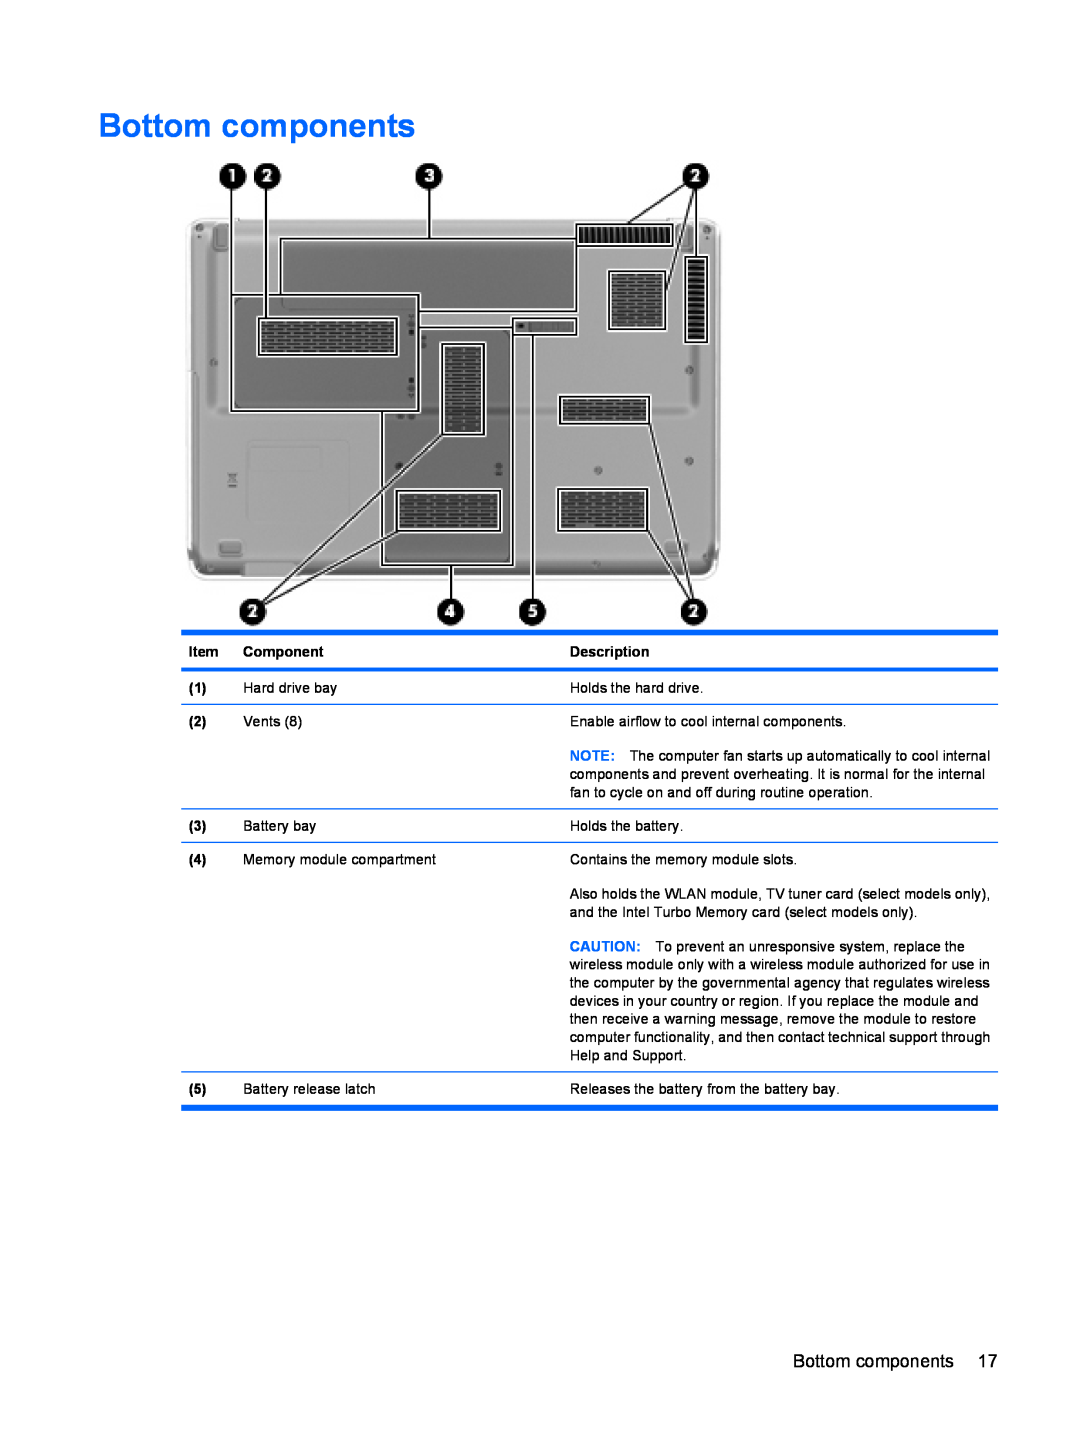 HP DV6 manual Bottom components 